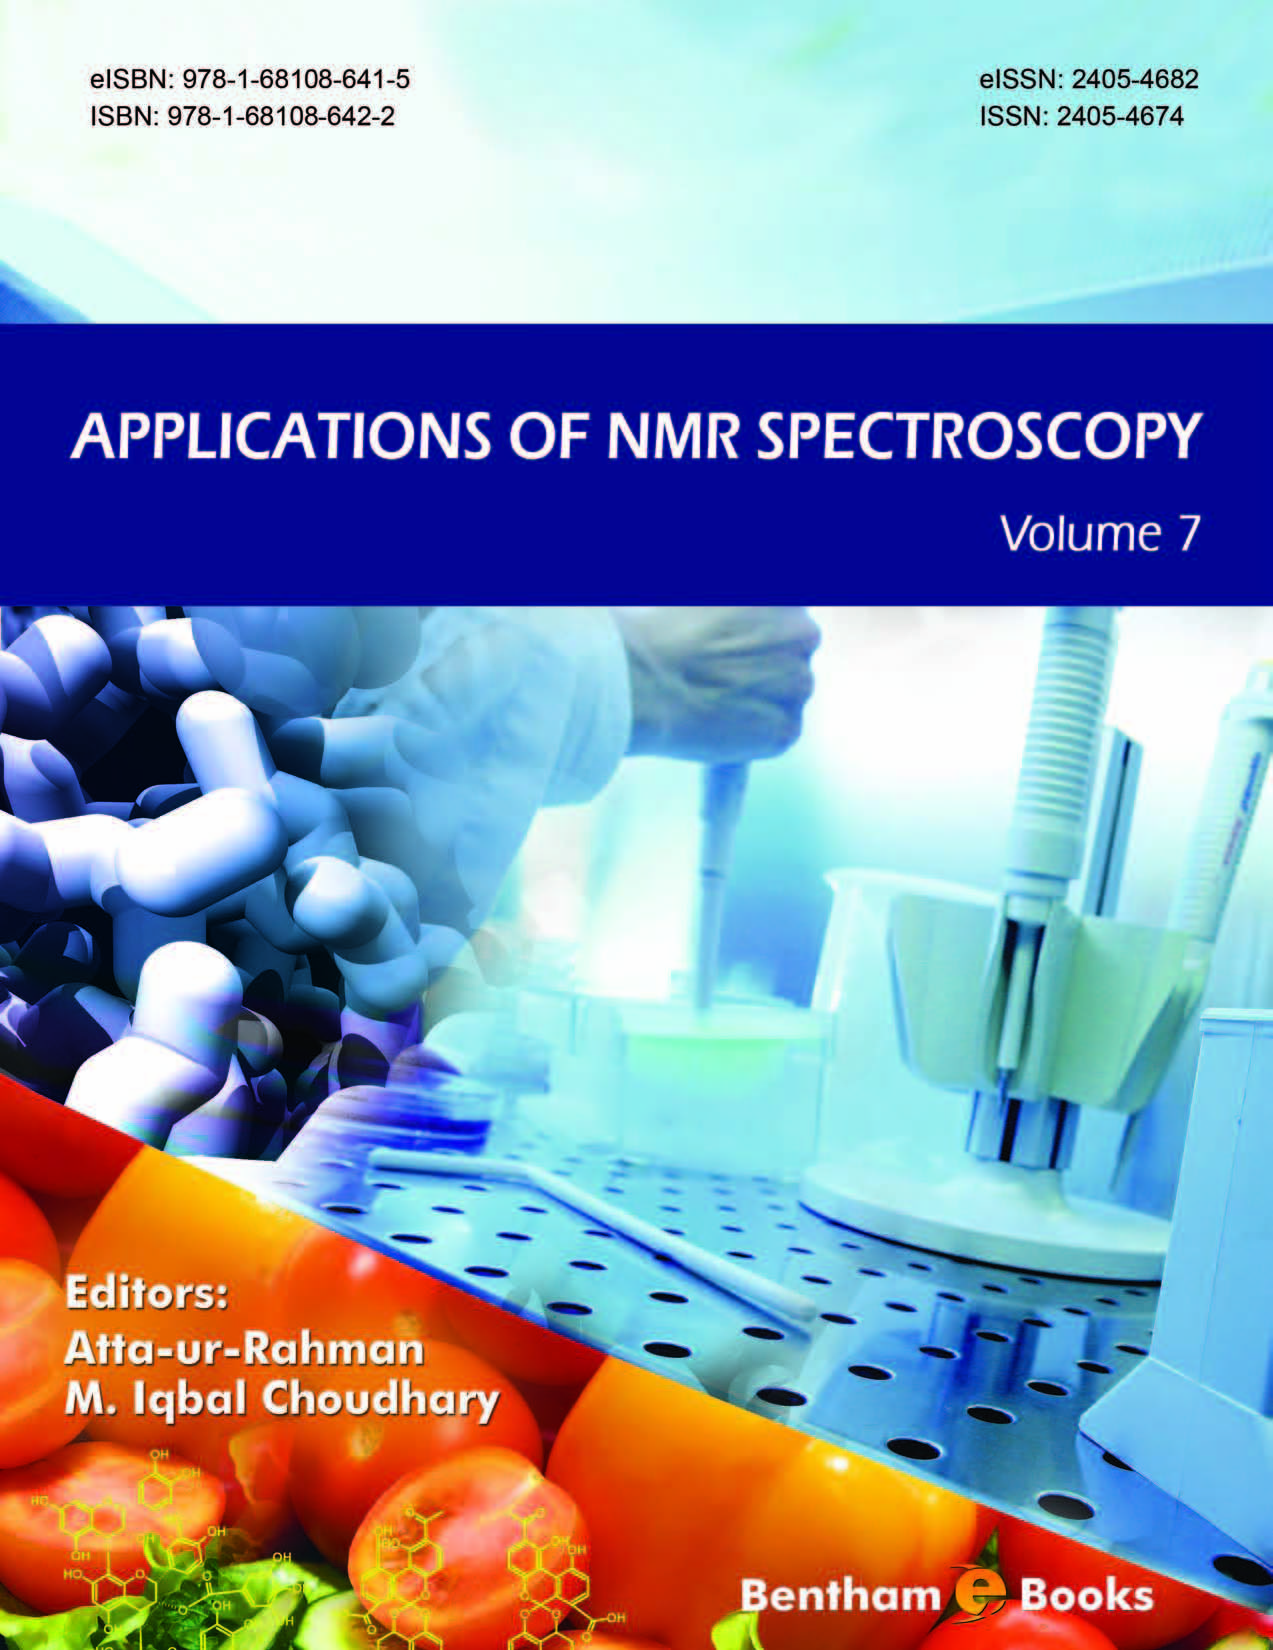 Applications of NMR Spectroscopy